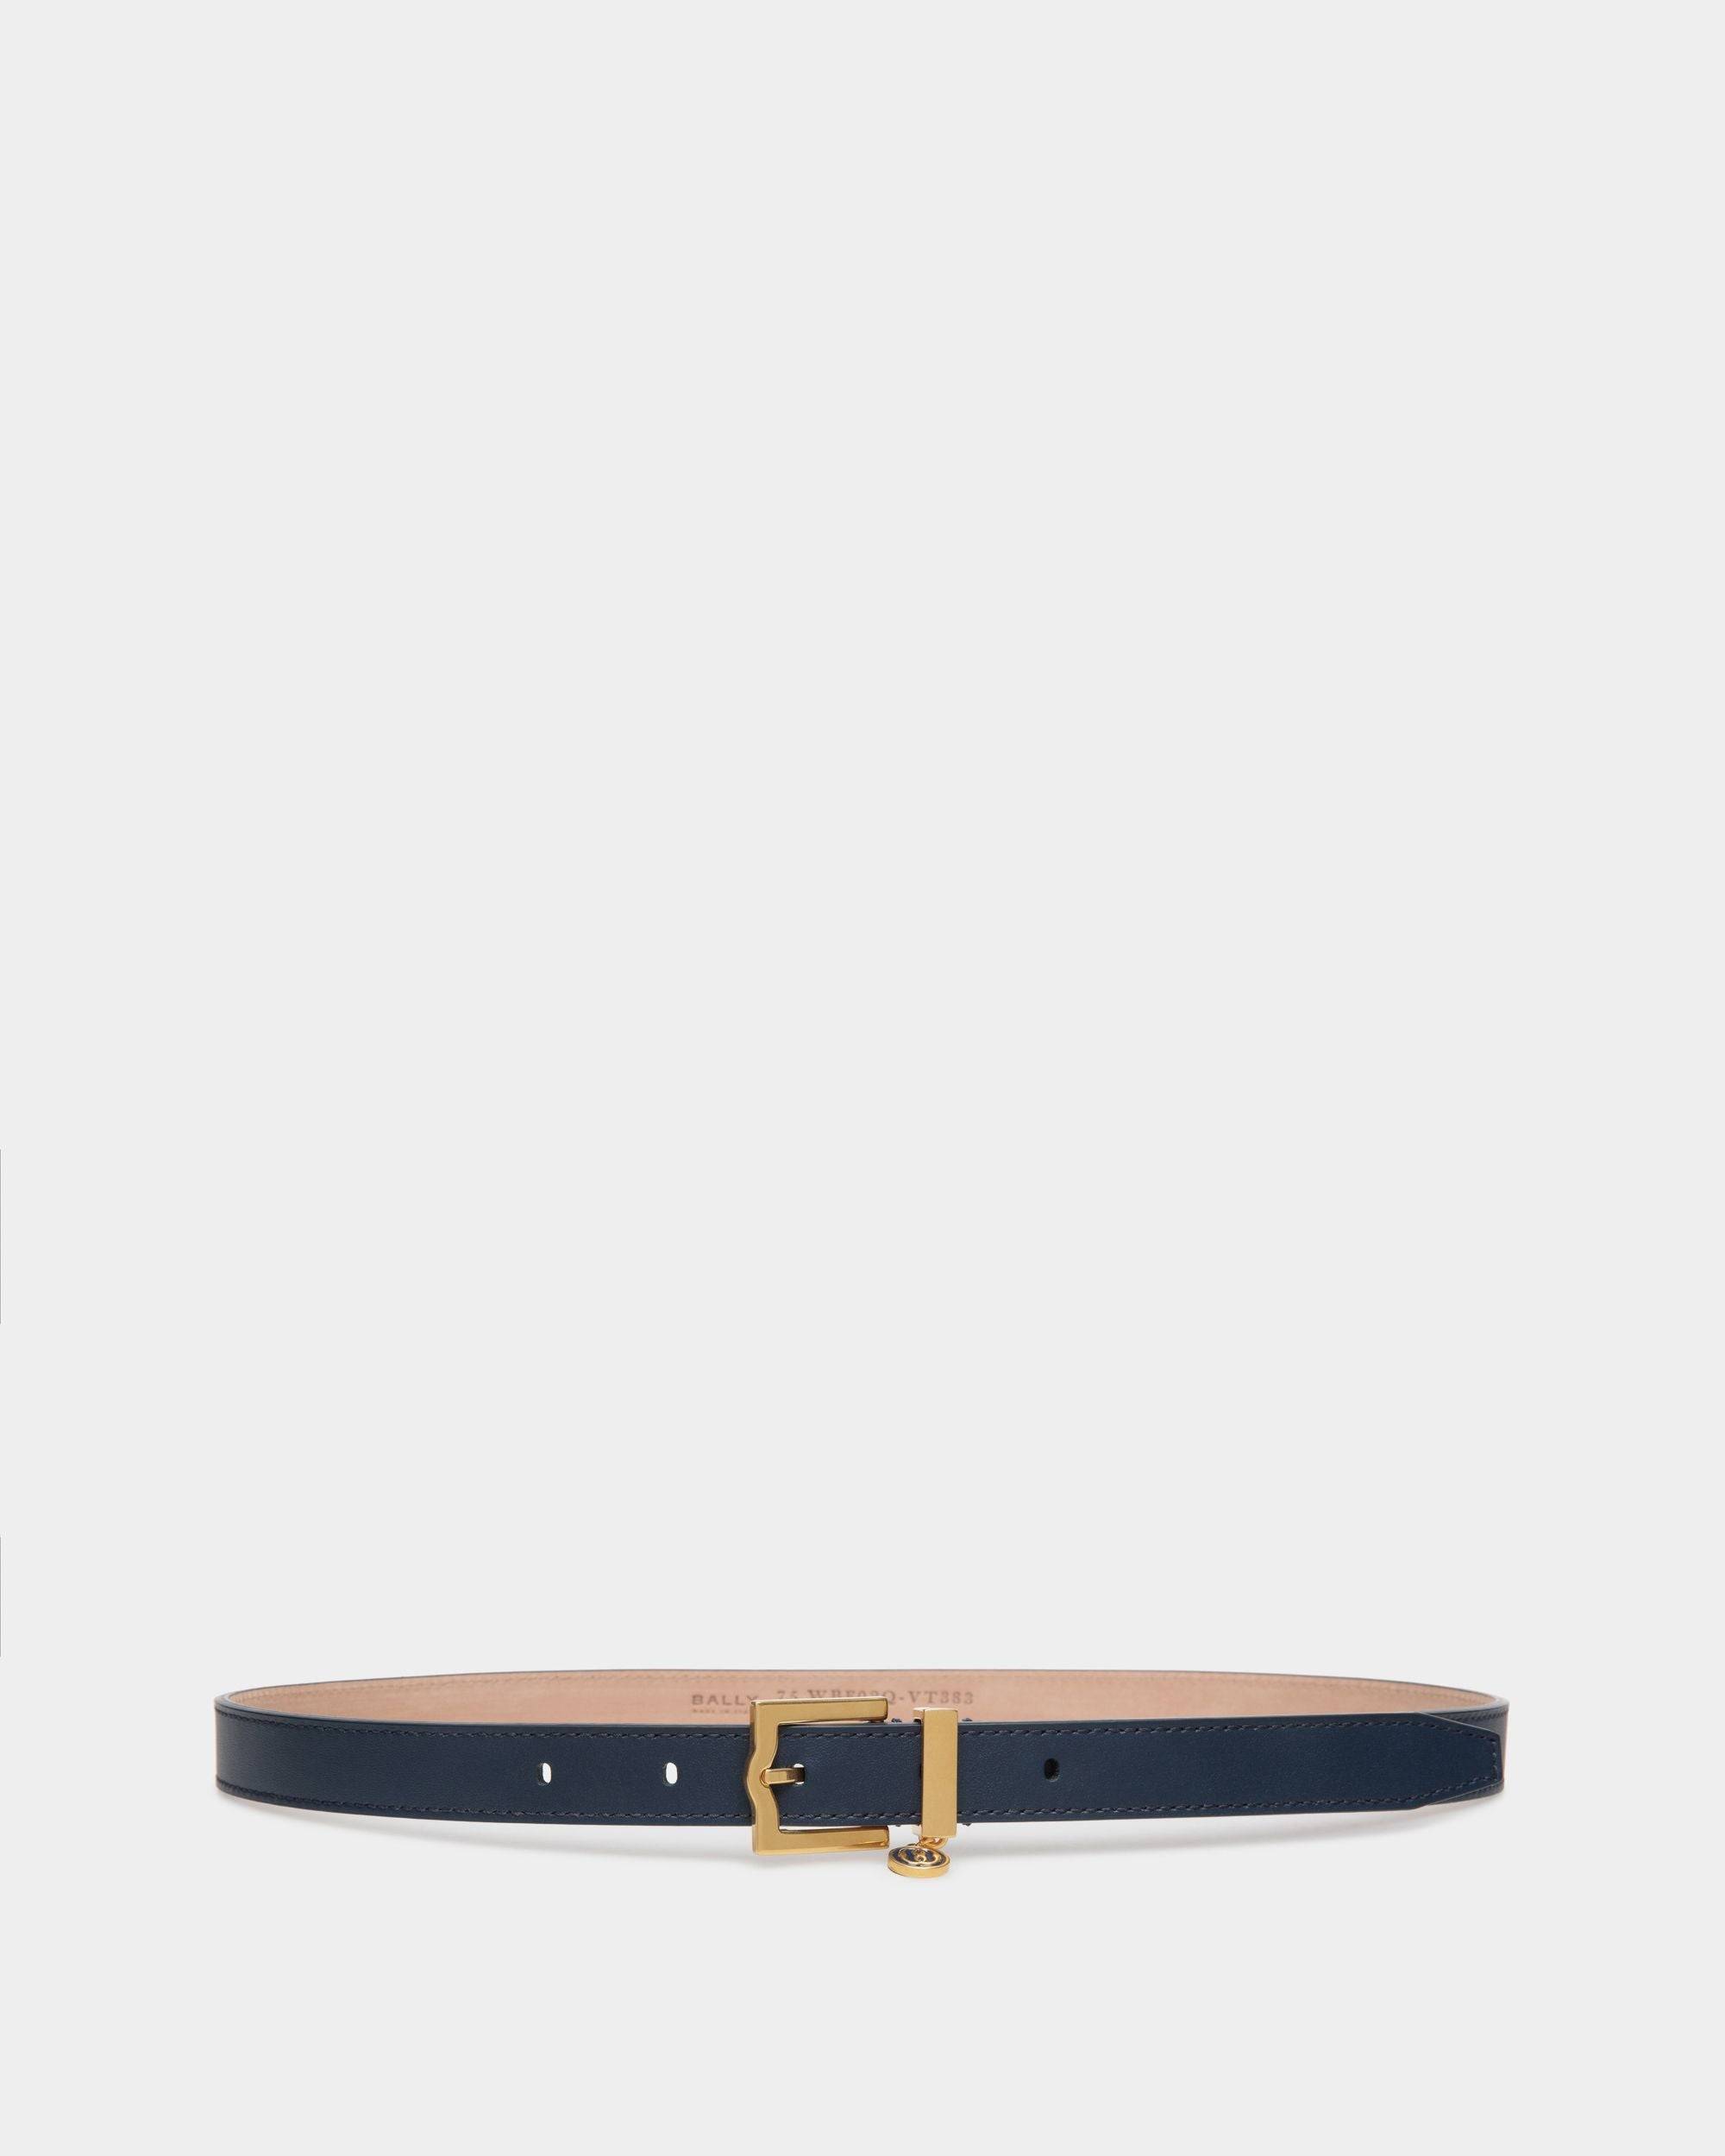 Women's Emblem 20mm Belt in Leather | Bally | Still Life Front